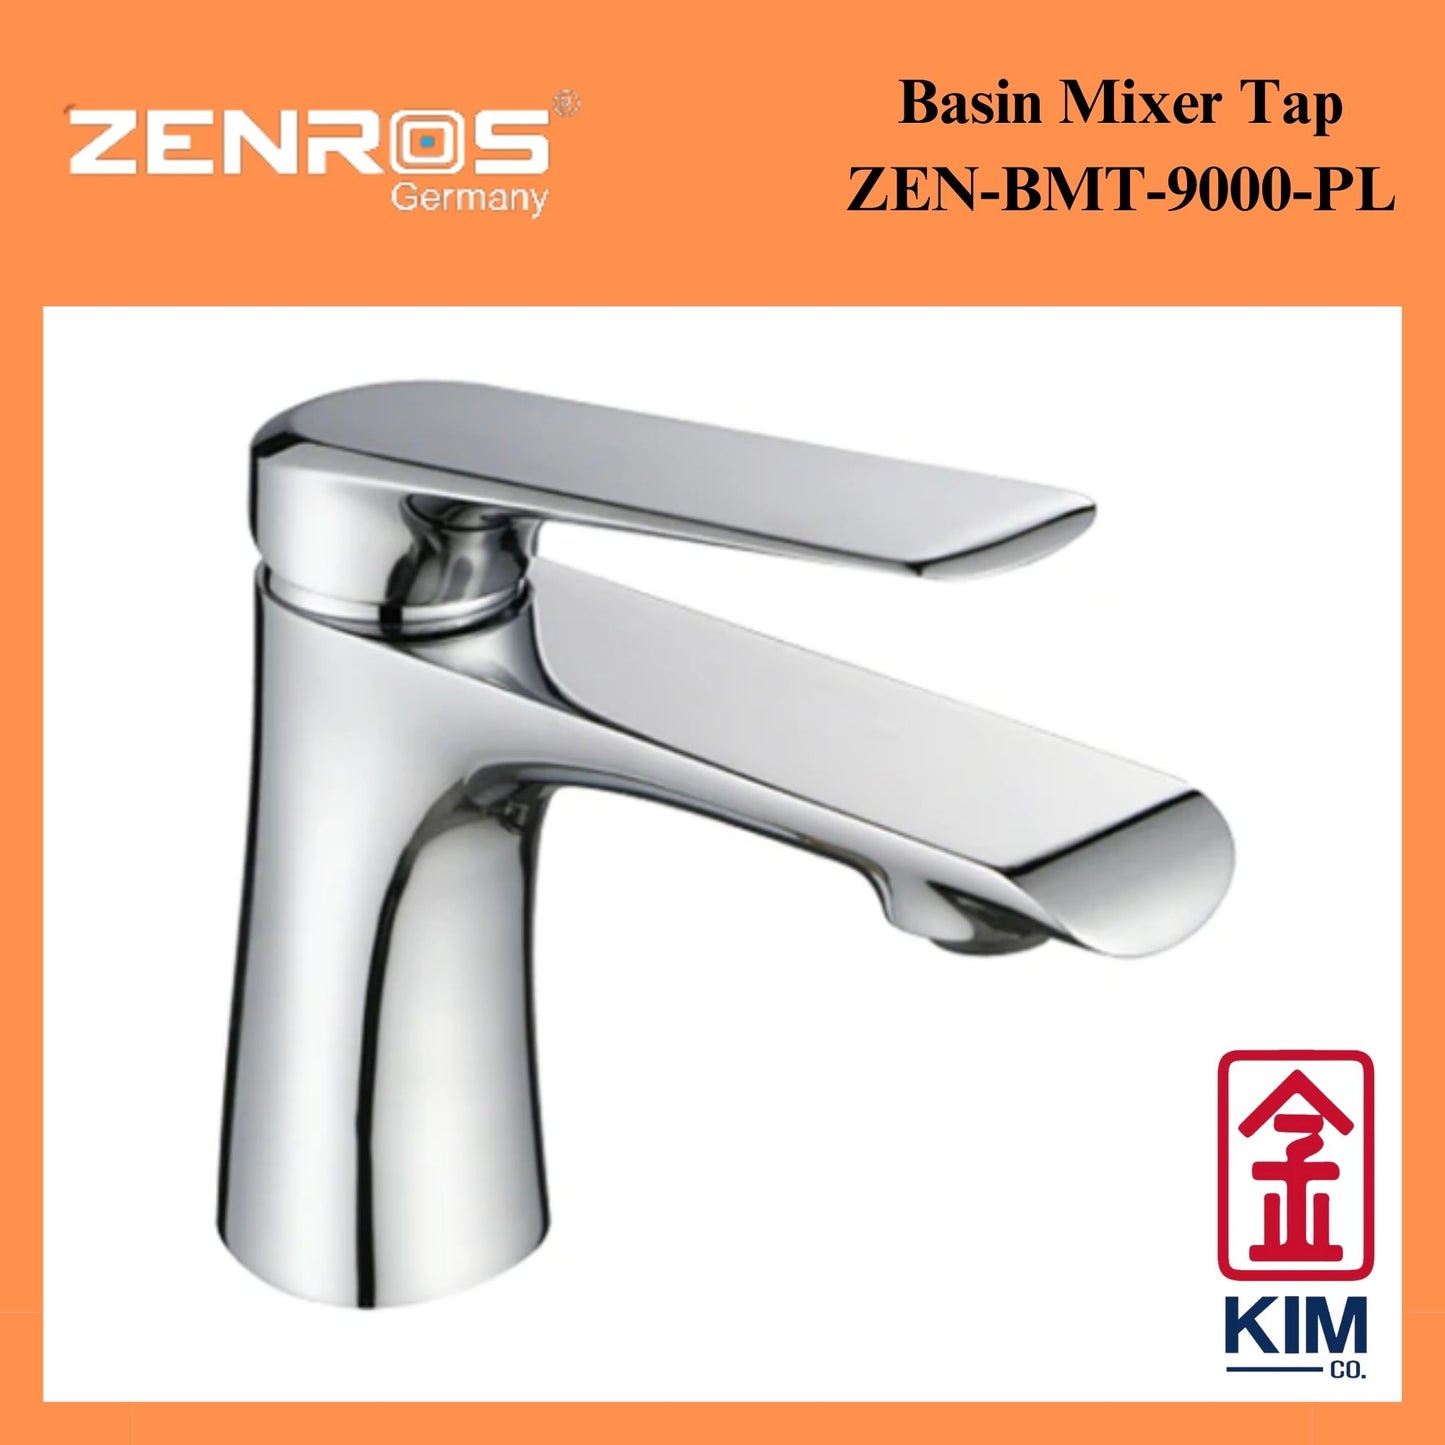 Zenros Basin Mixer Without Pop Up Waste (ZEN-BMT-9000-PL)